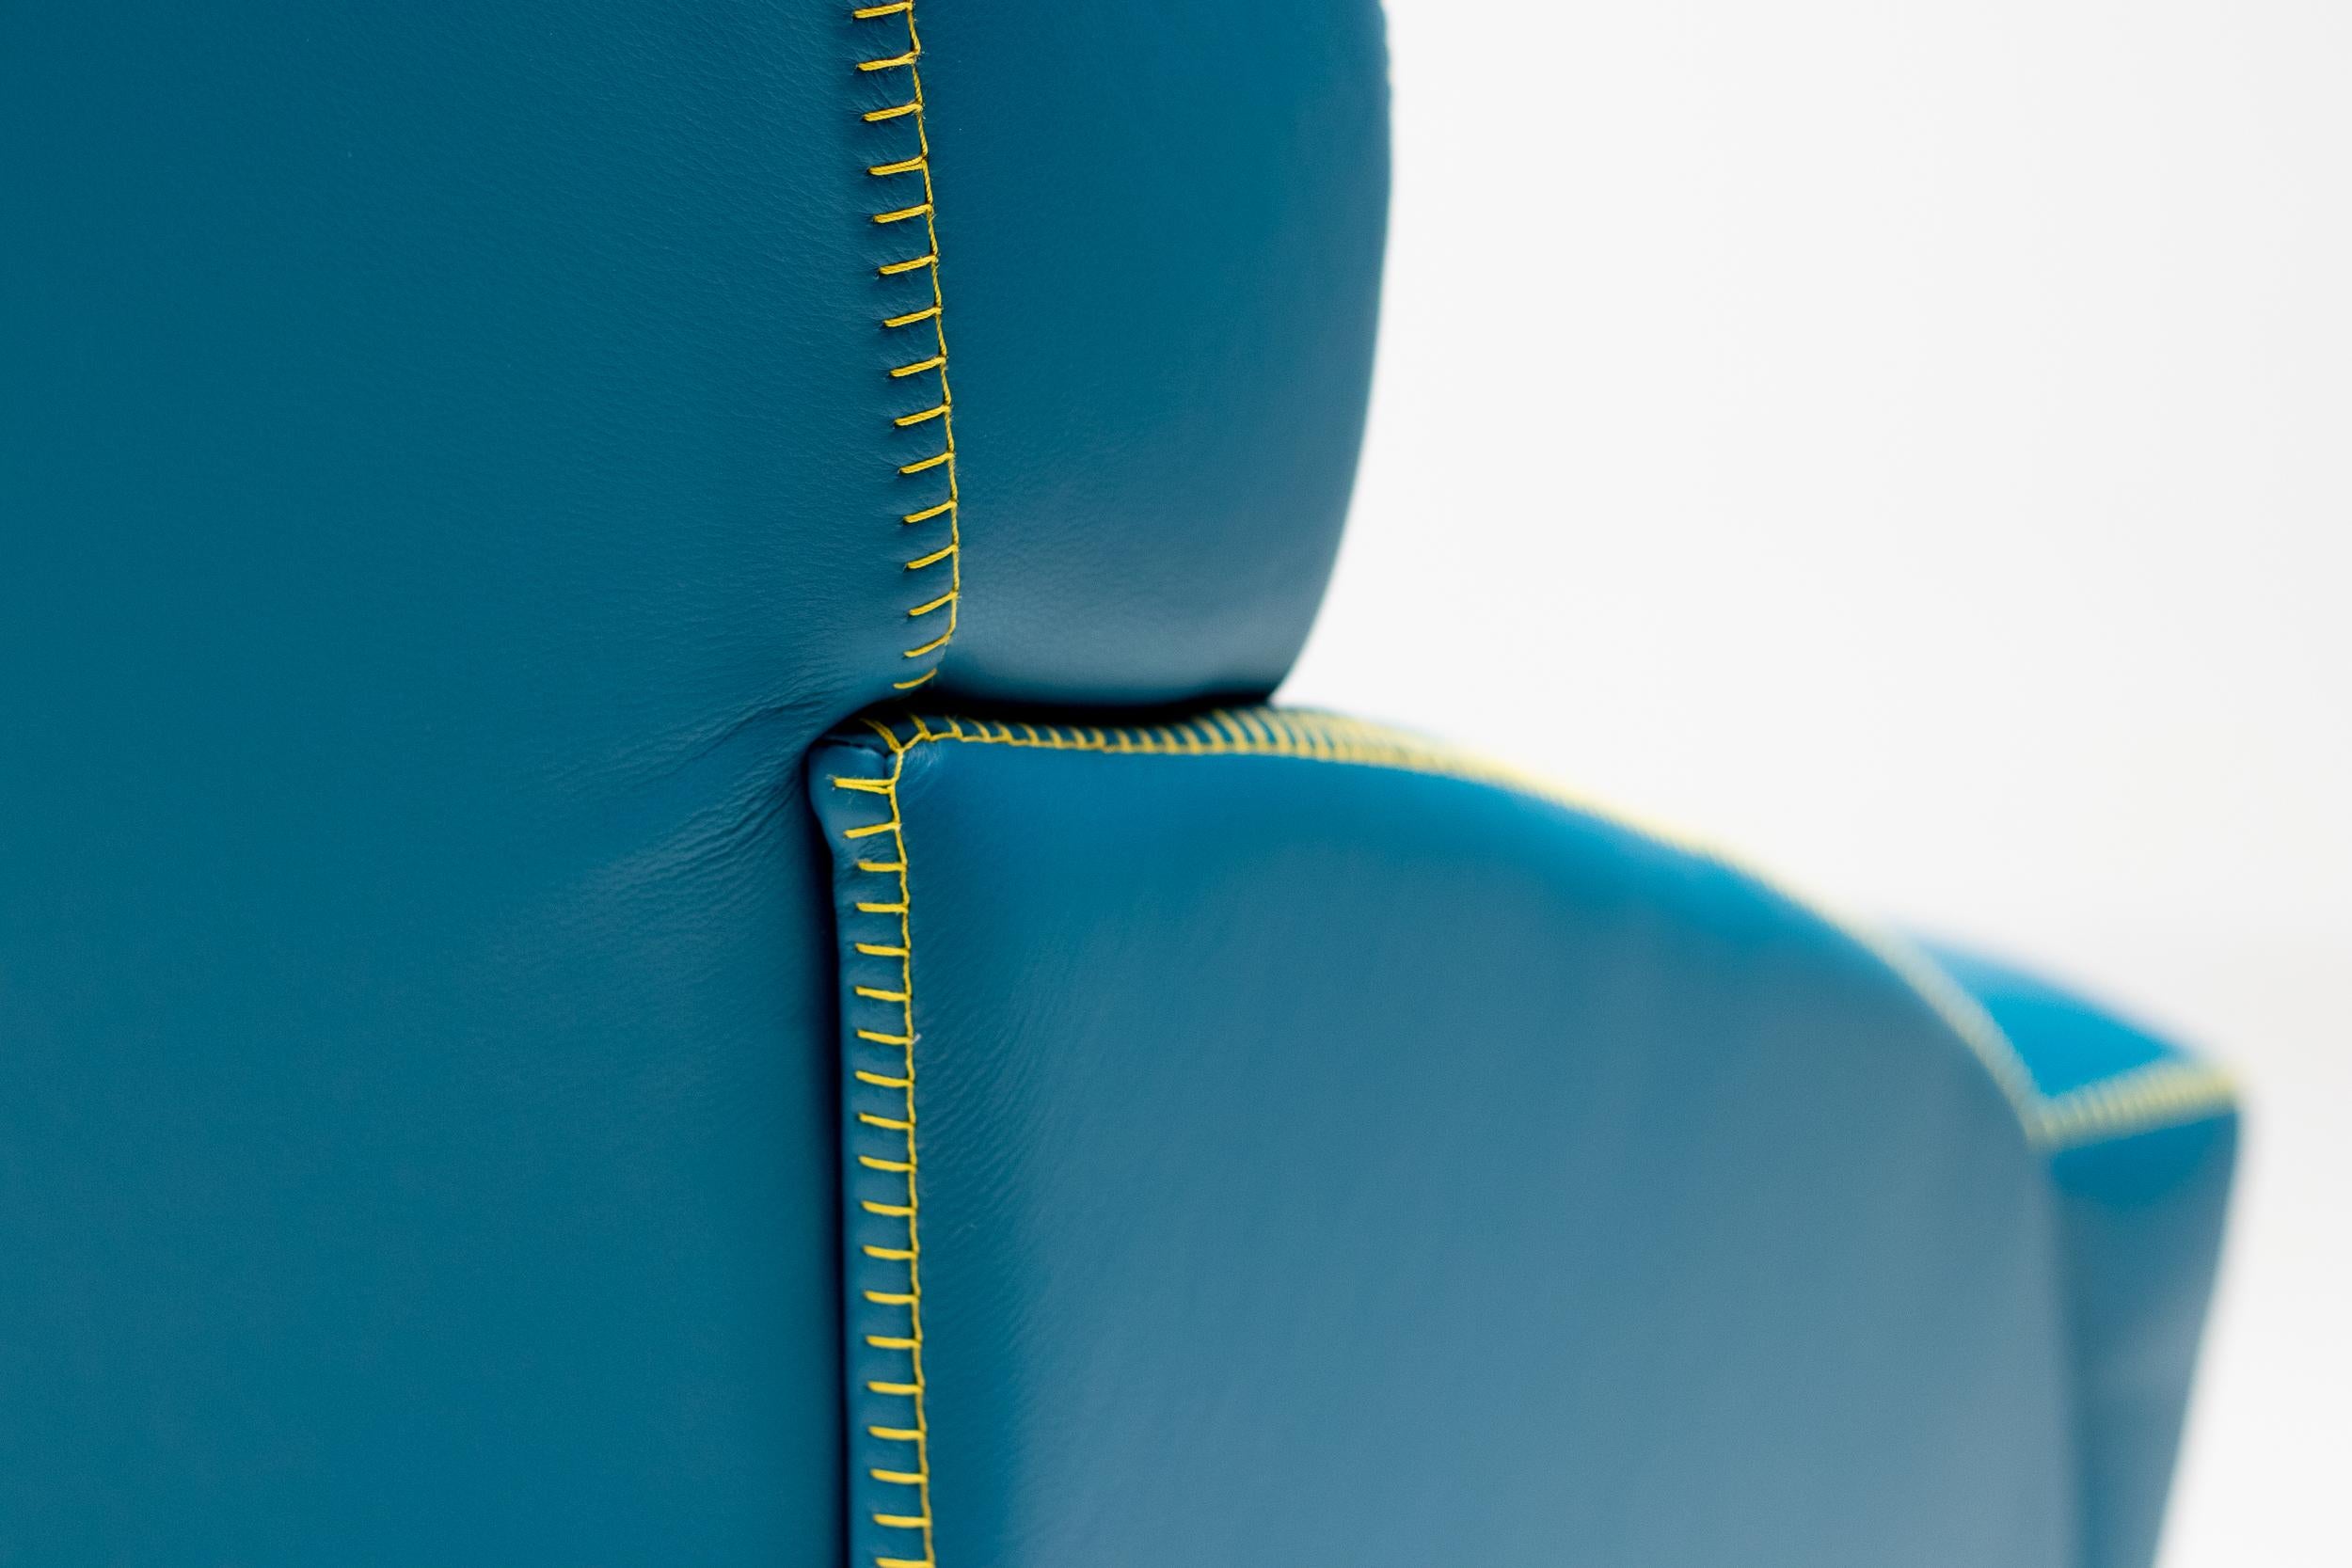 Late 20th Century Turquoise Love Seat by Nicoline Salotti 